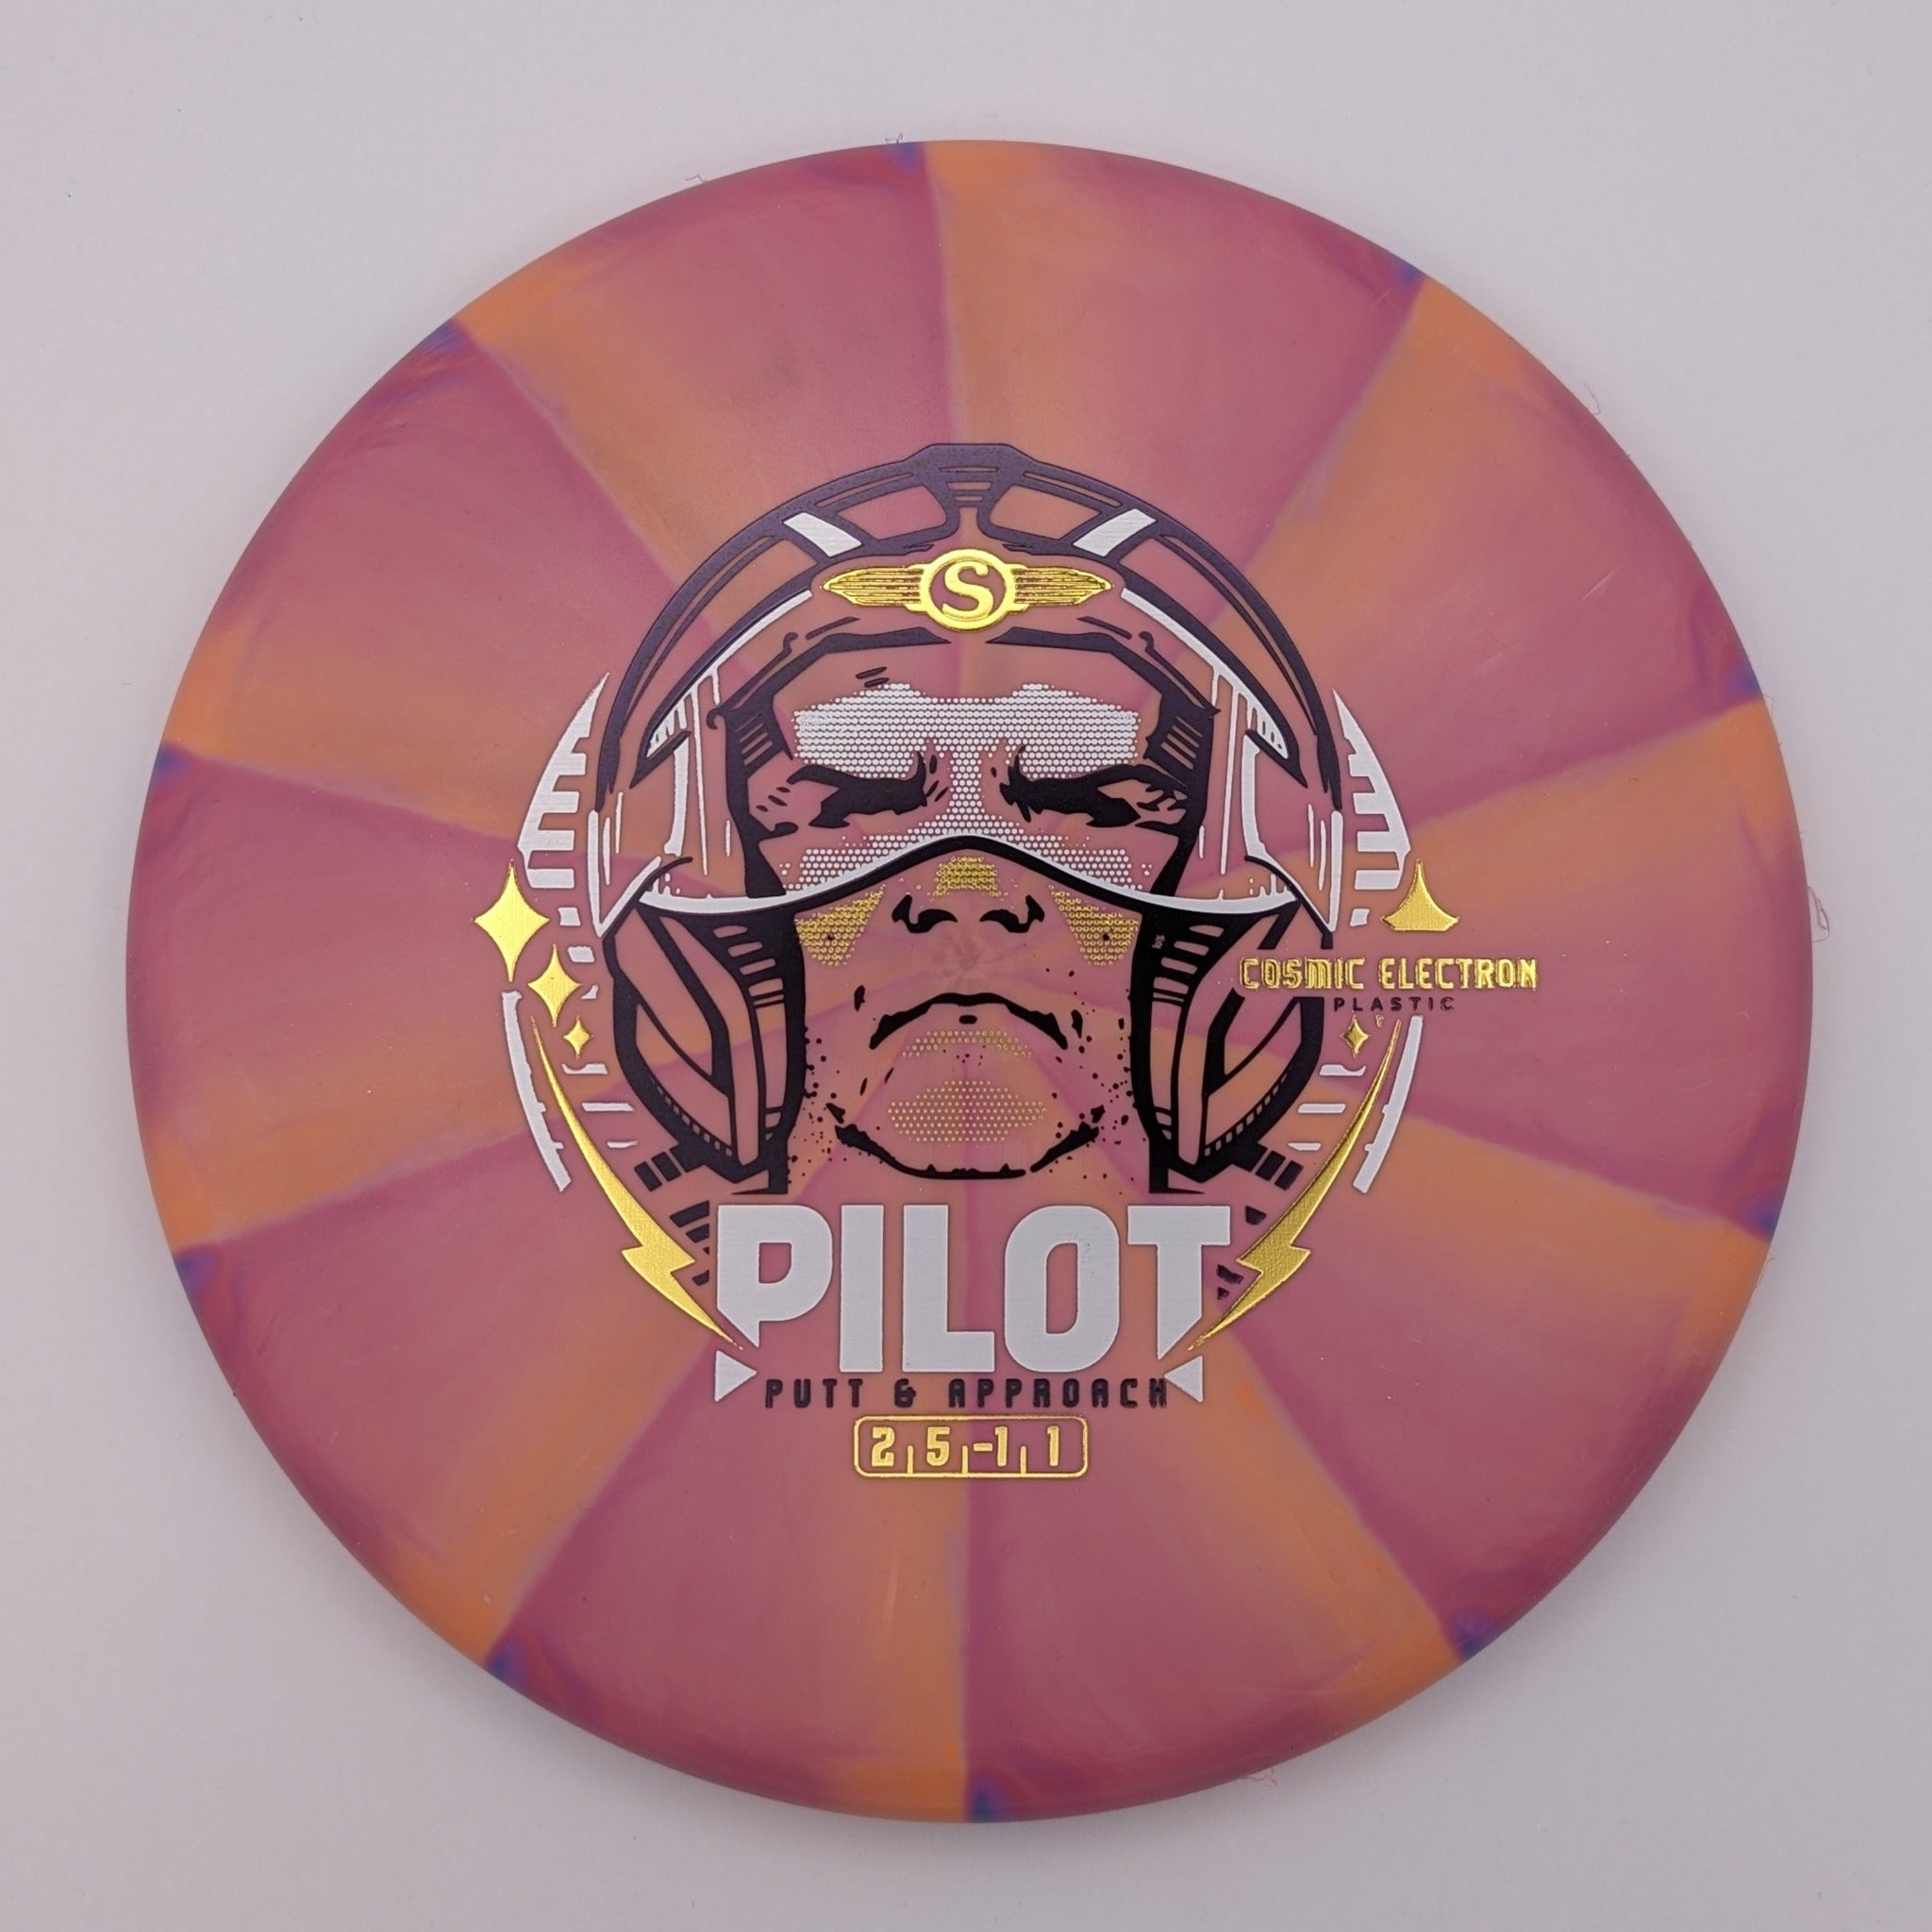 STREAMLINE Putt & Approach Pilot Cosmic Electron Plastic Pink